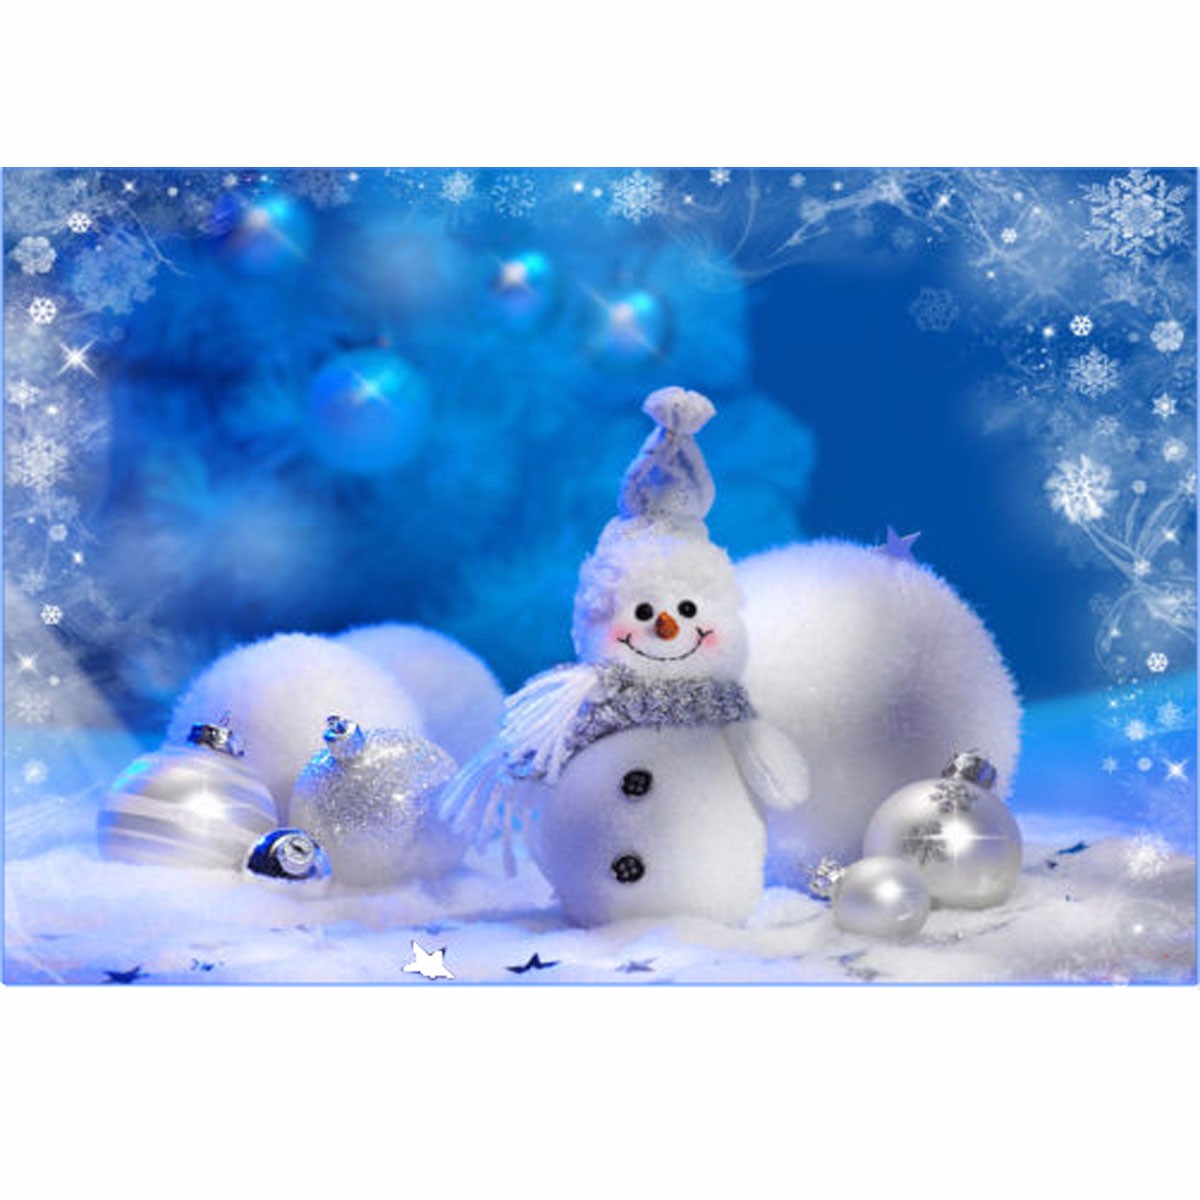 Vinyl-Fabric-Christmas-Snowman-Studio-Photography-Background-Backdrop-1104876-3